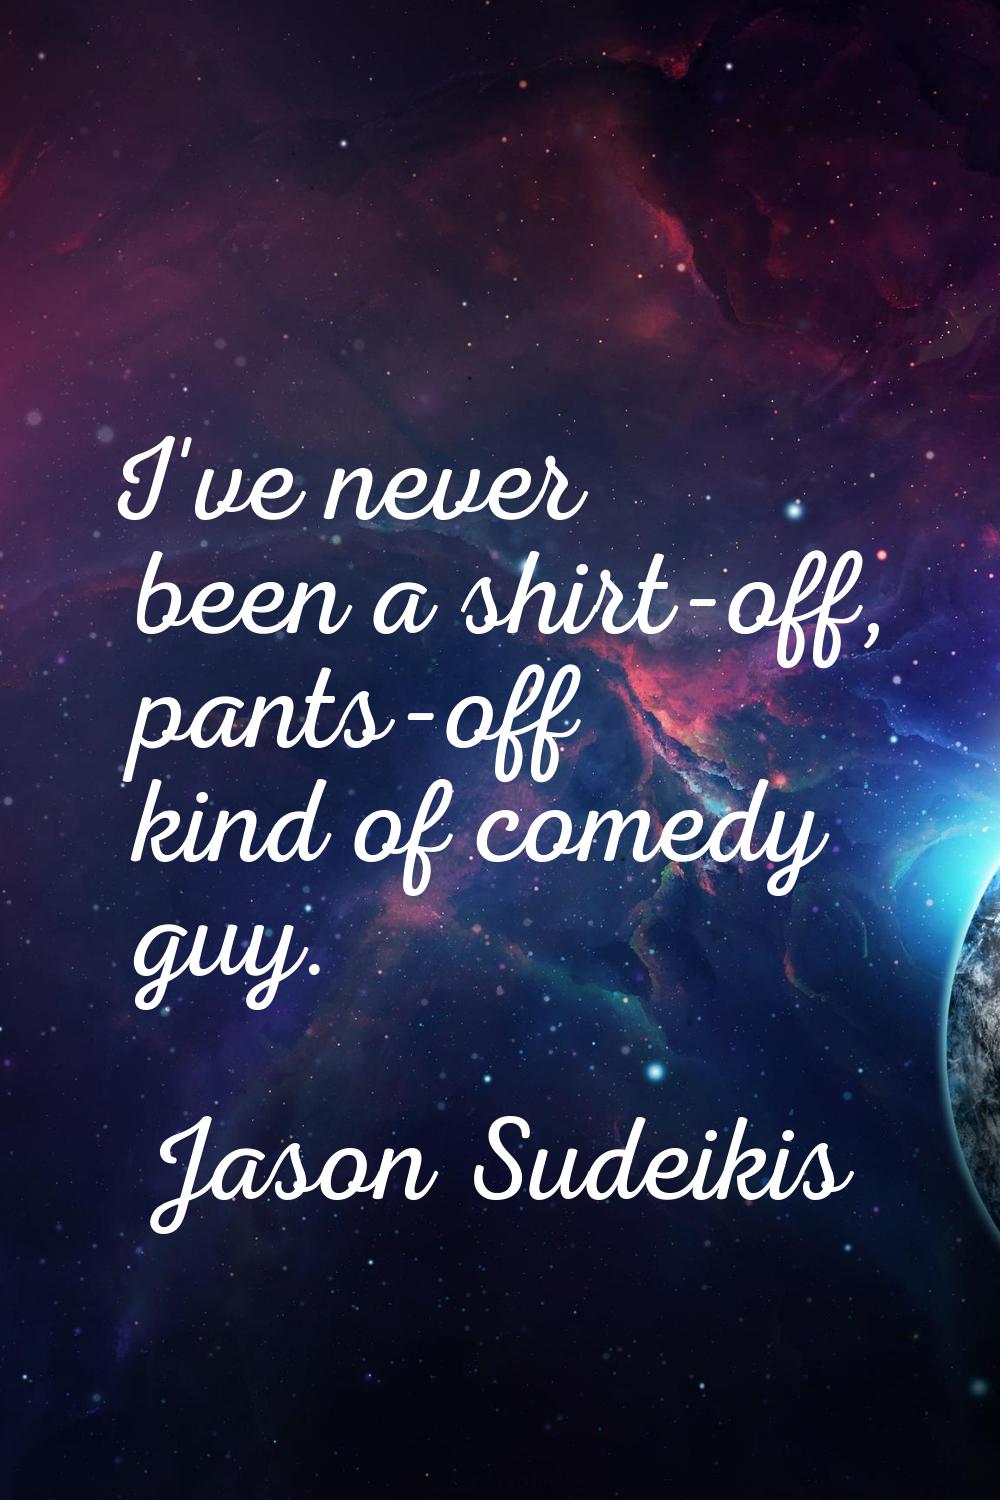 I've never been a shirt-off, pants-off kind of comedy guy.